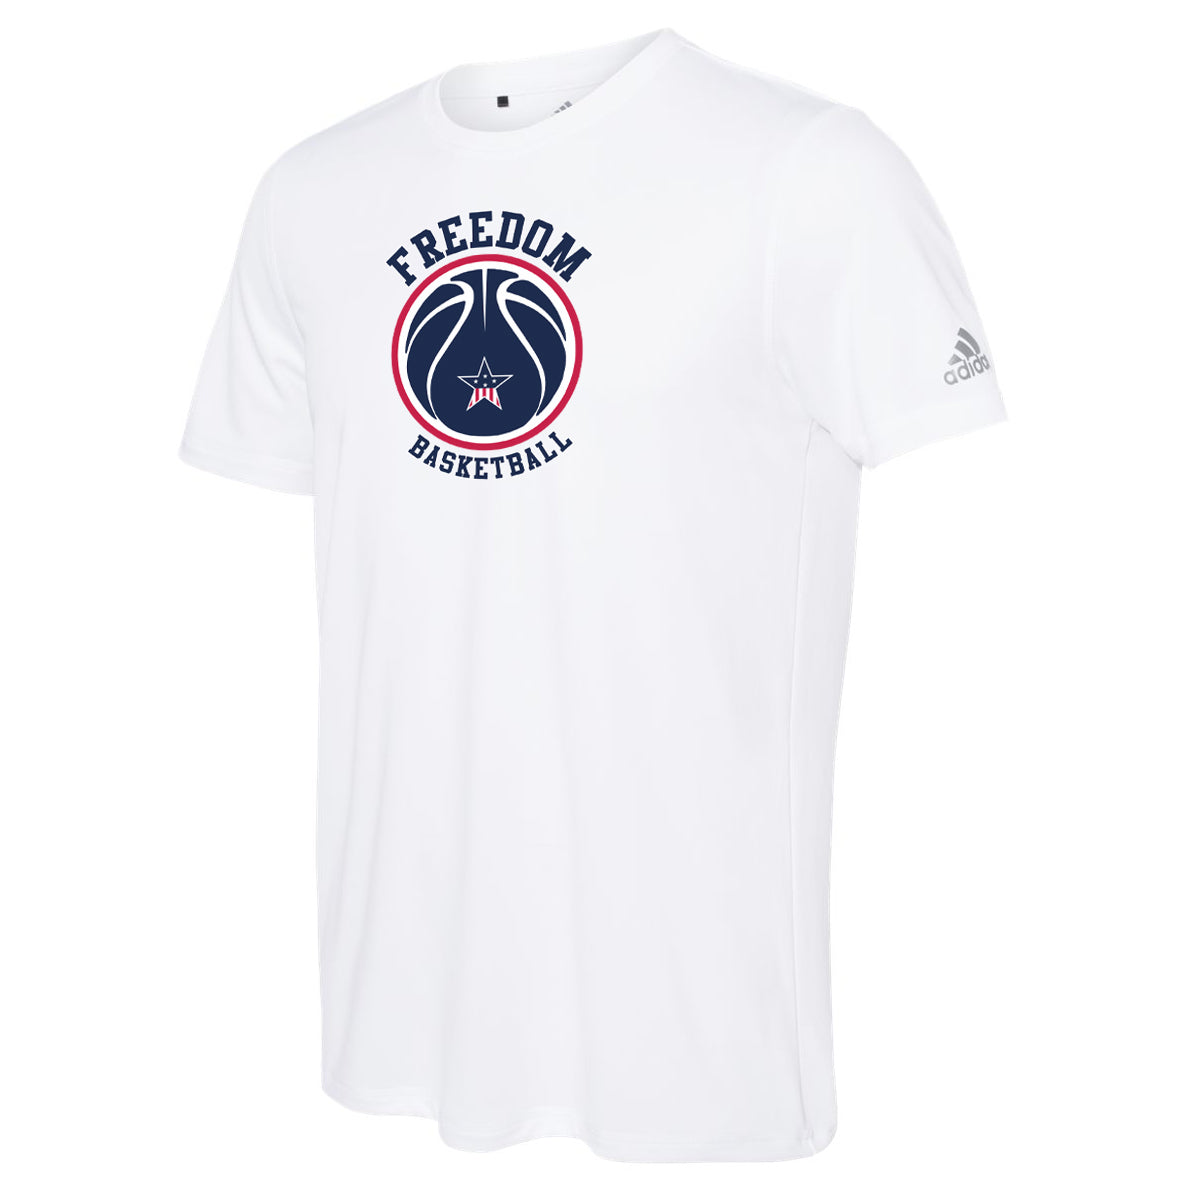 Freedom Basketball Adidas Sport T-Shirt